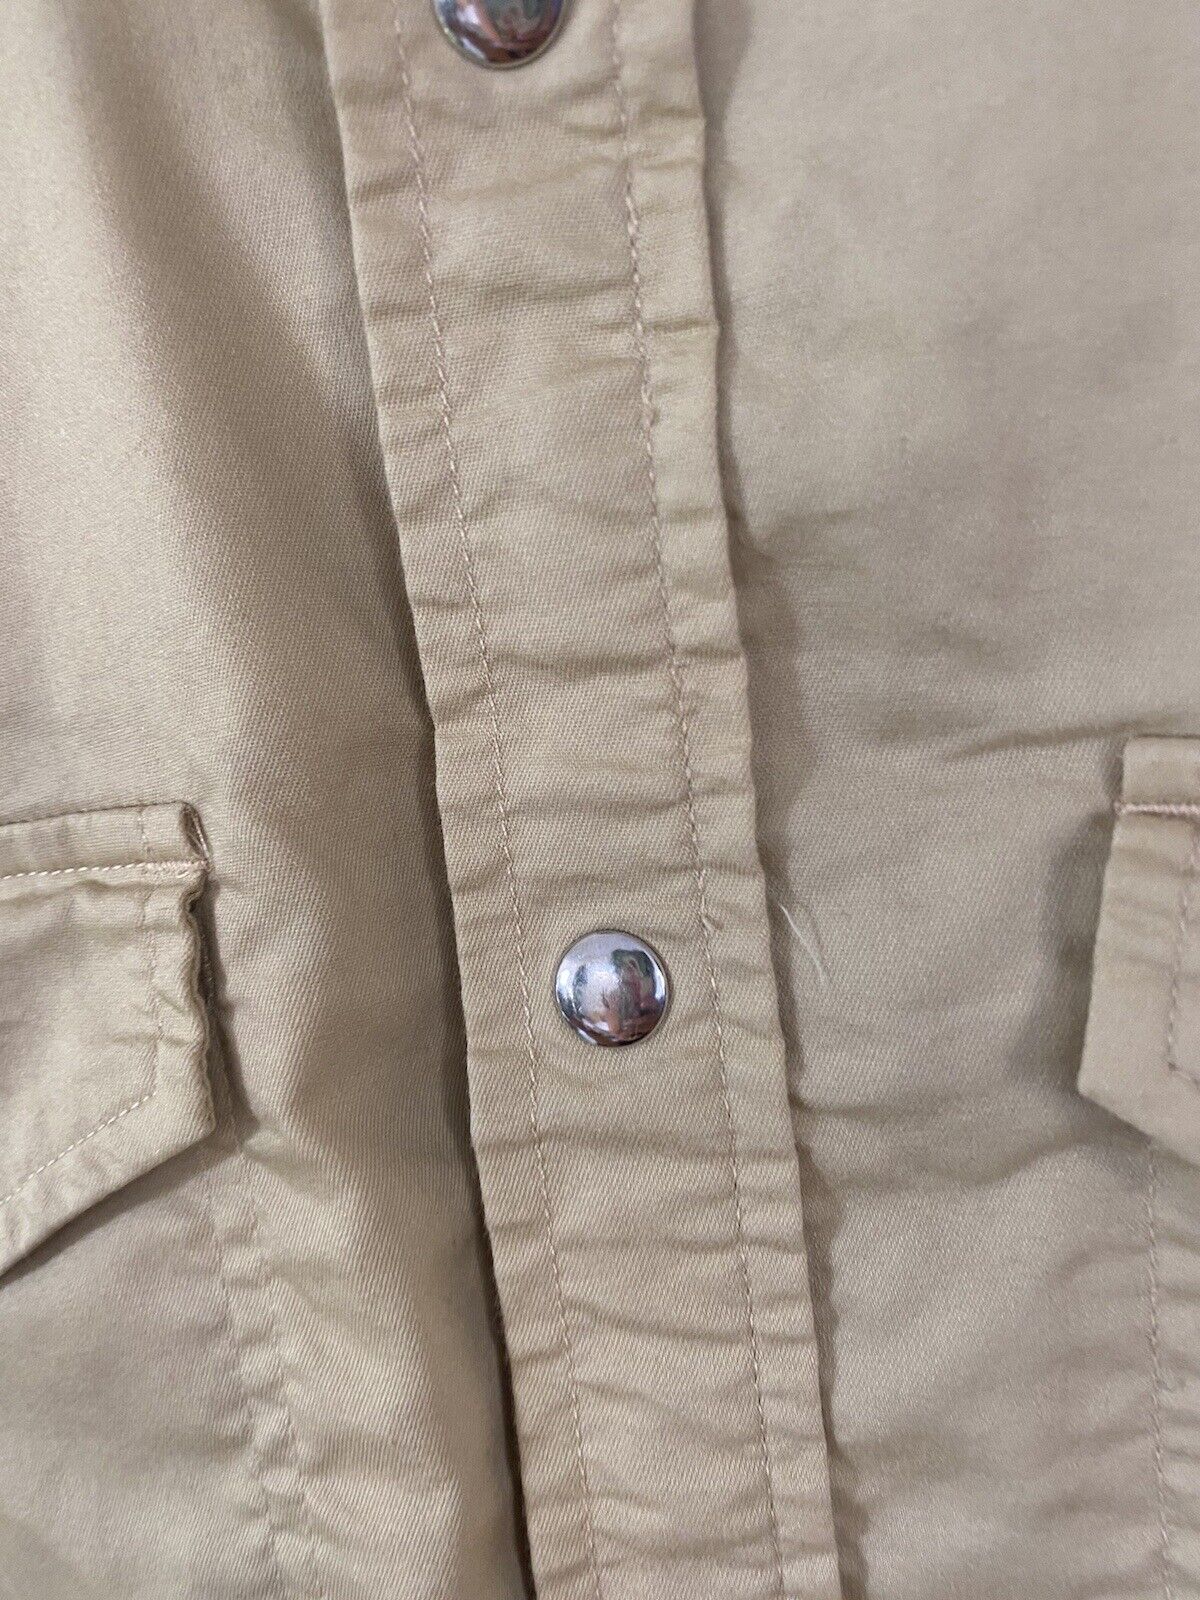 Ivory Button Down Shirt - Royal Robbins - Men’s Large # 1968